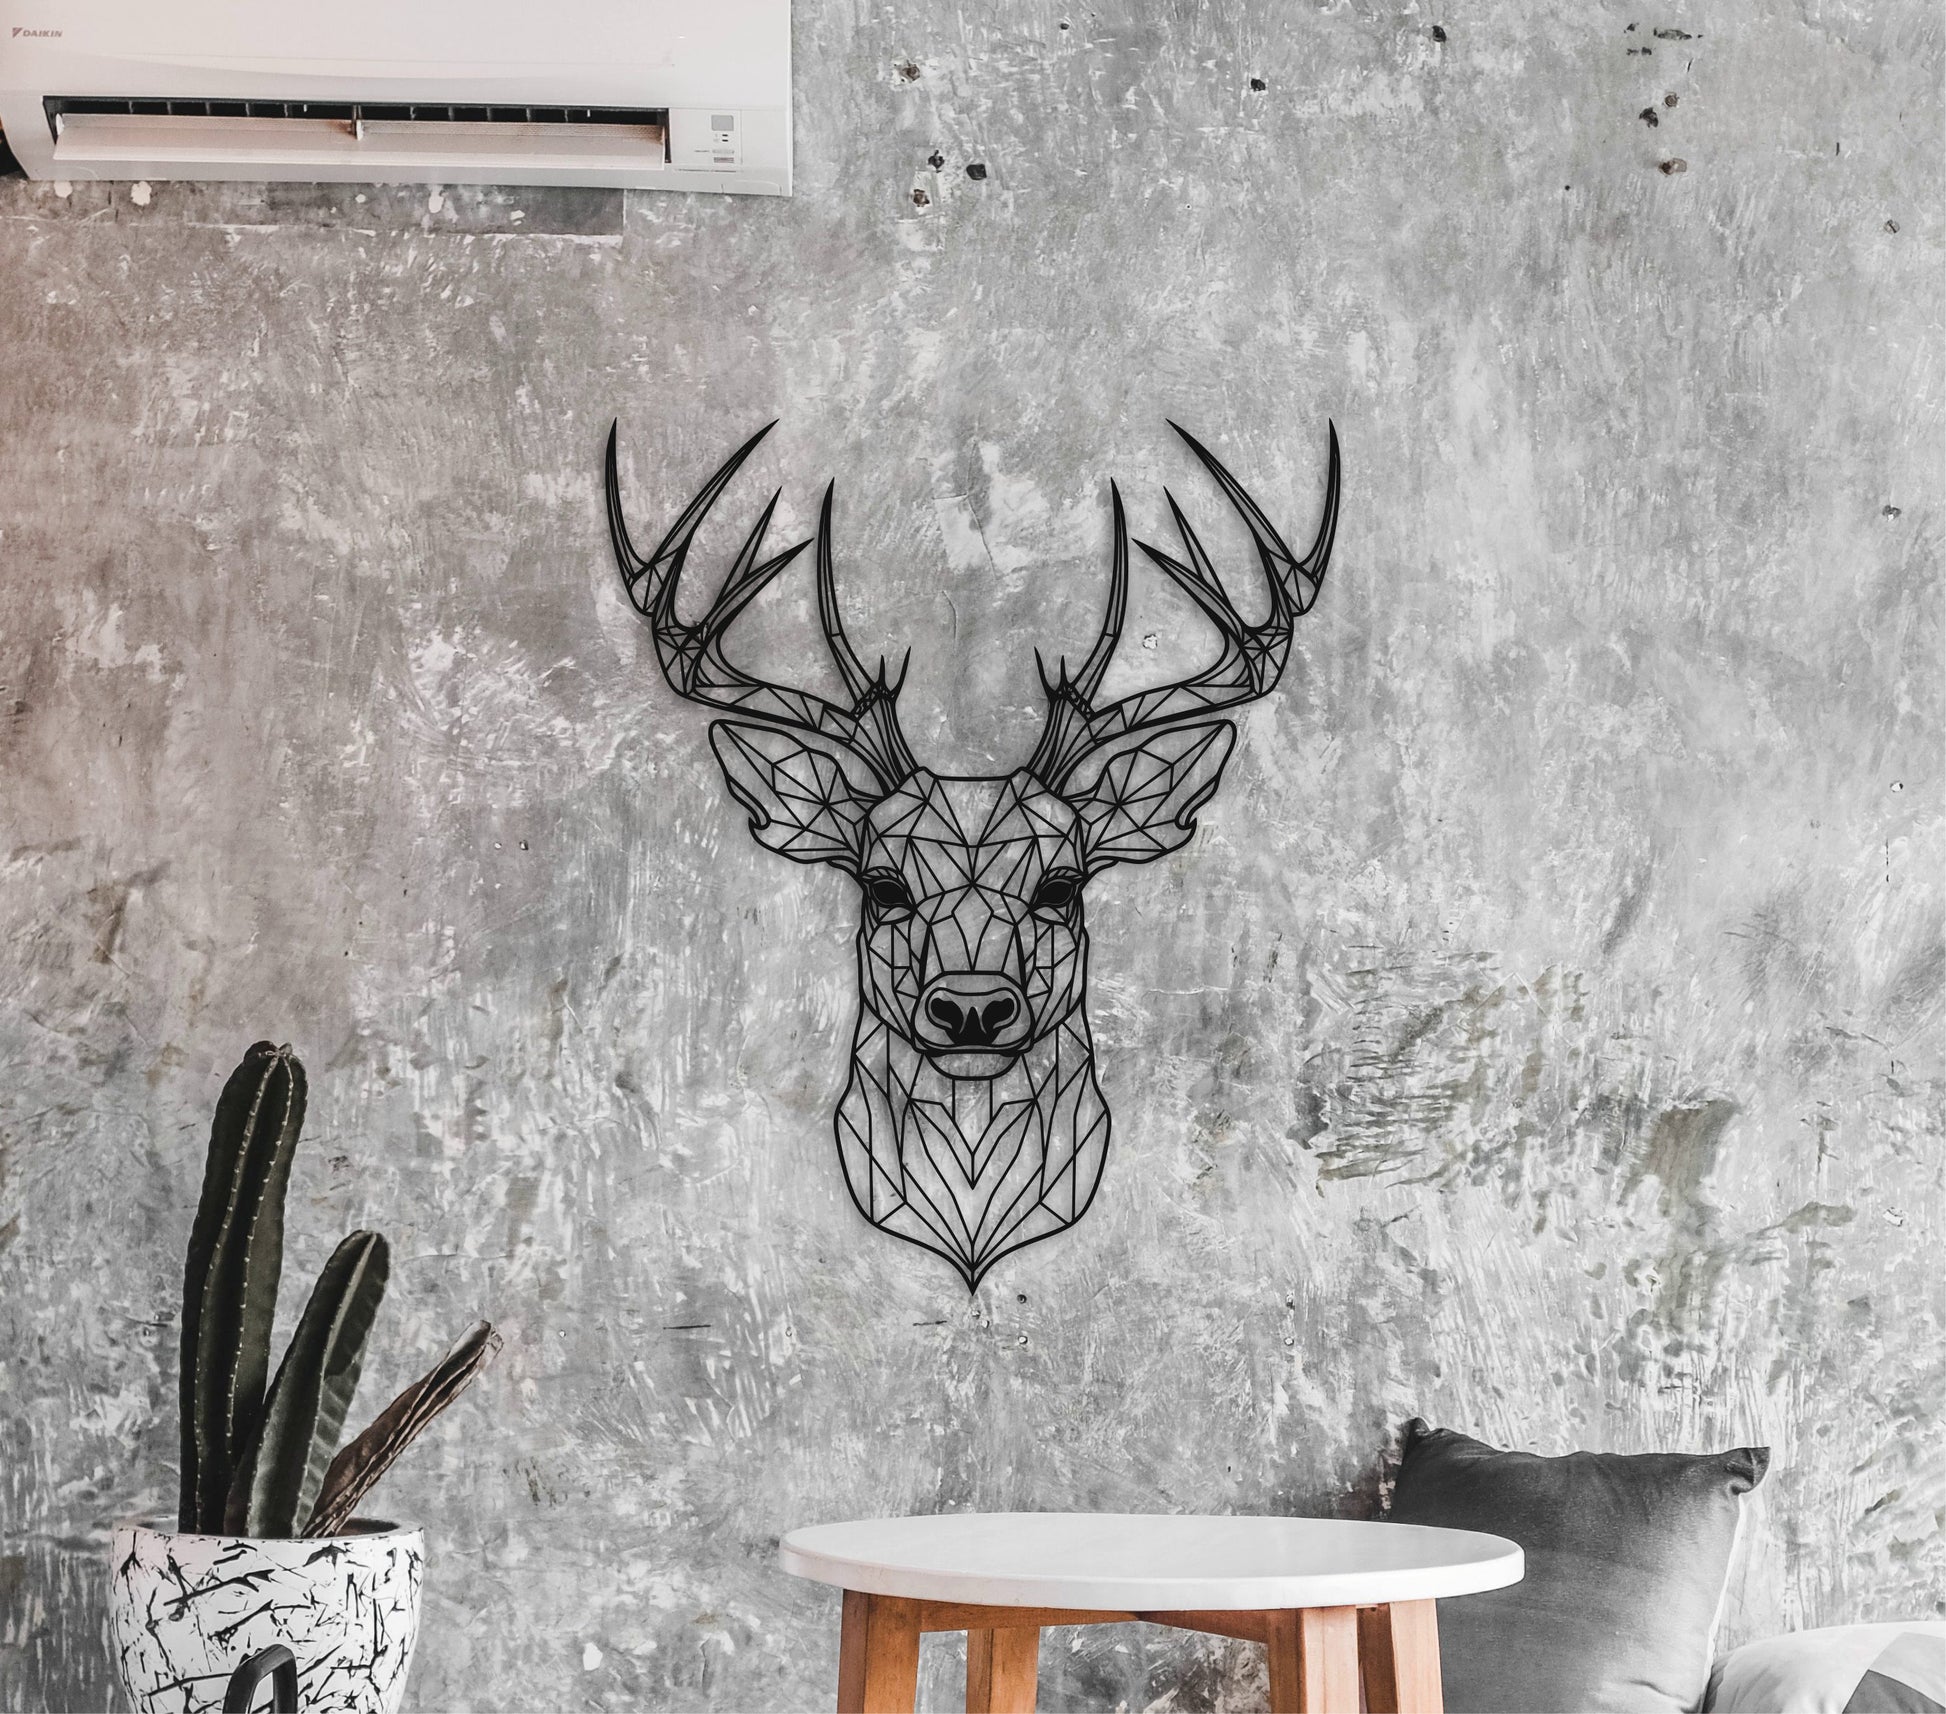 Deer wall art, Large wall decor, Wooden decorations, Housewarming gift, Animal decor